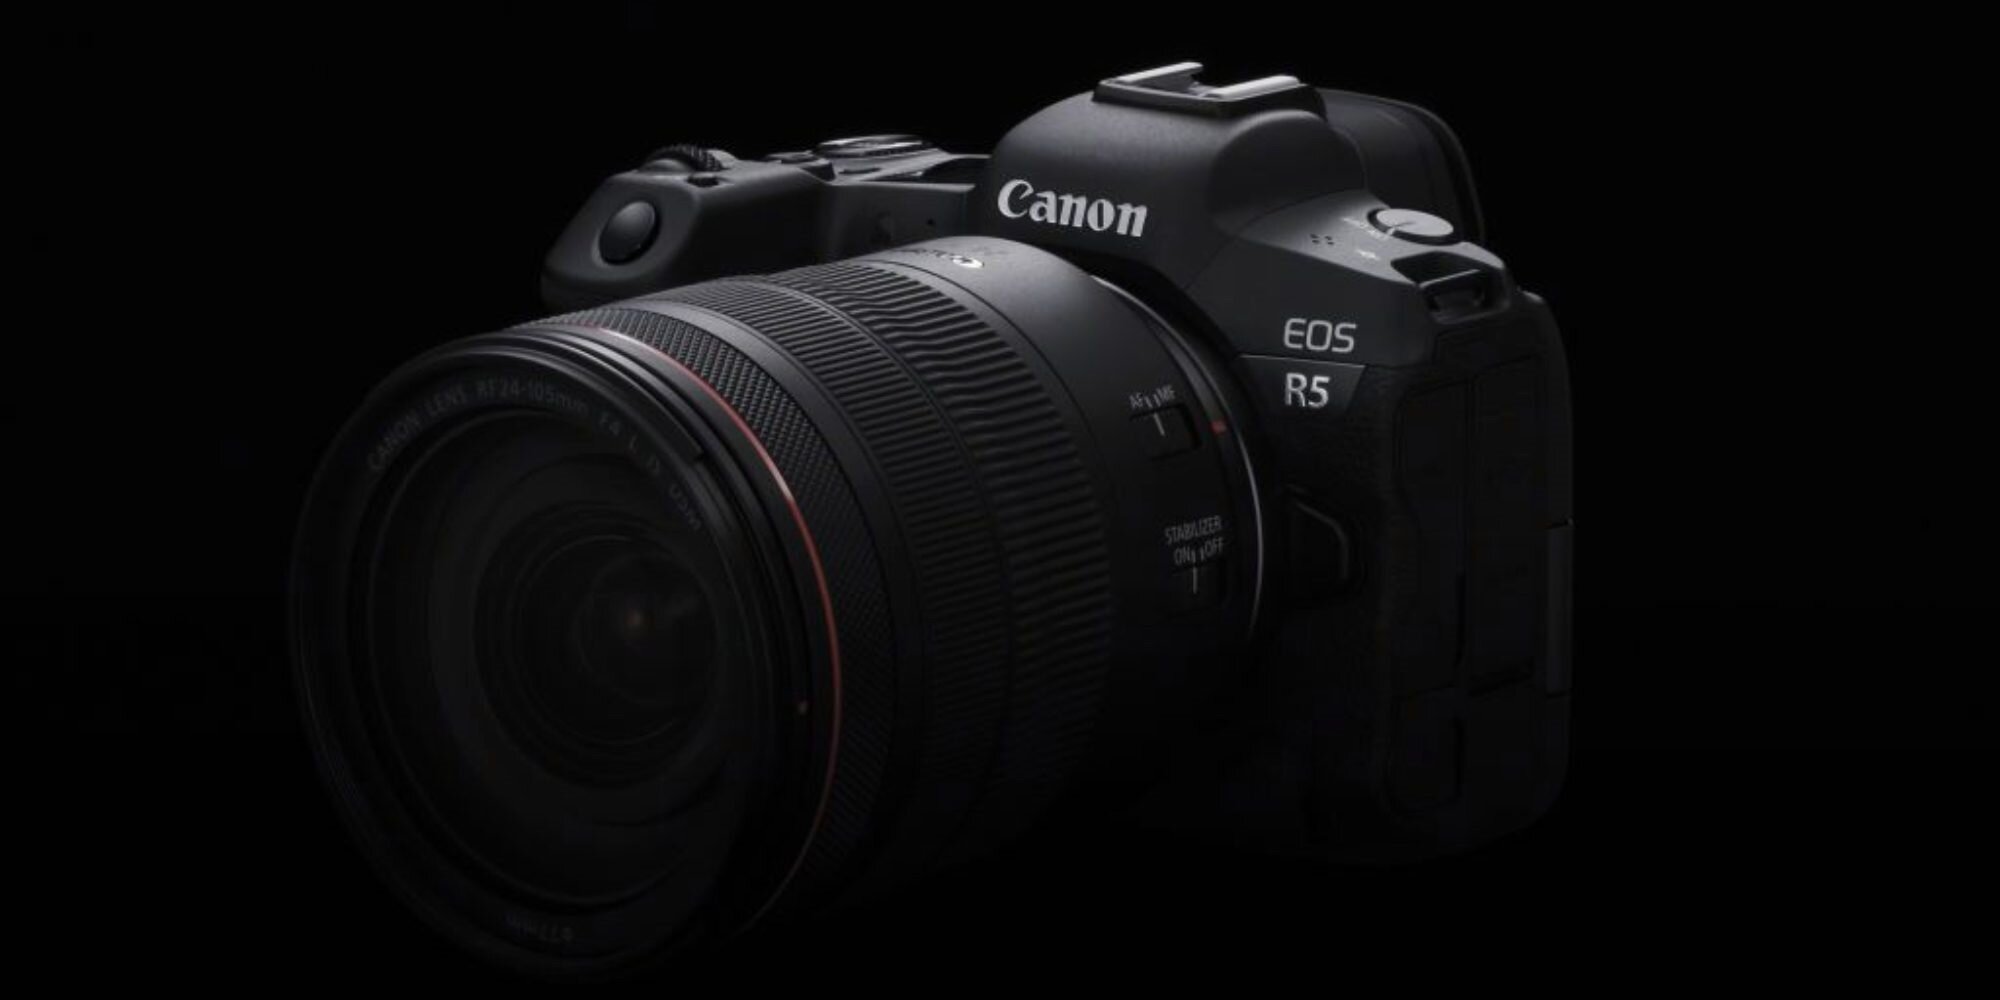 H Canon αποκάλυψε την ισχυρότερη της mirrorless, EOS R5, με 8K video δυνατότητες